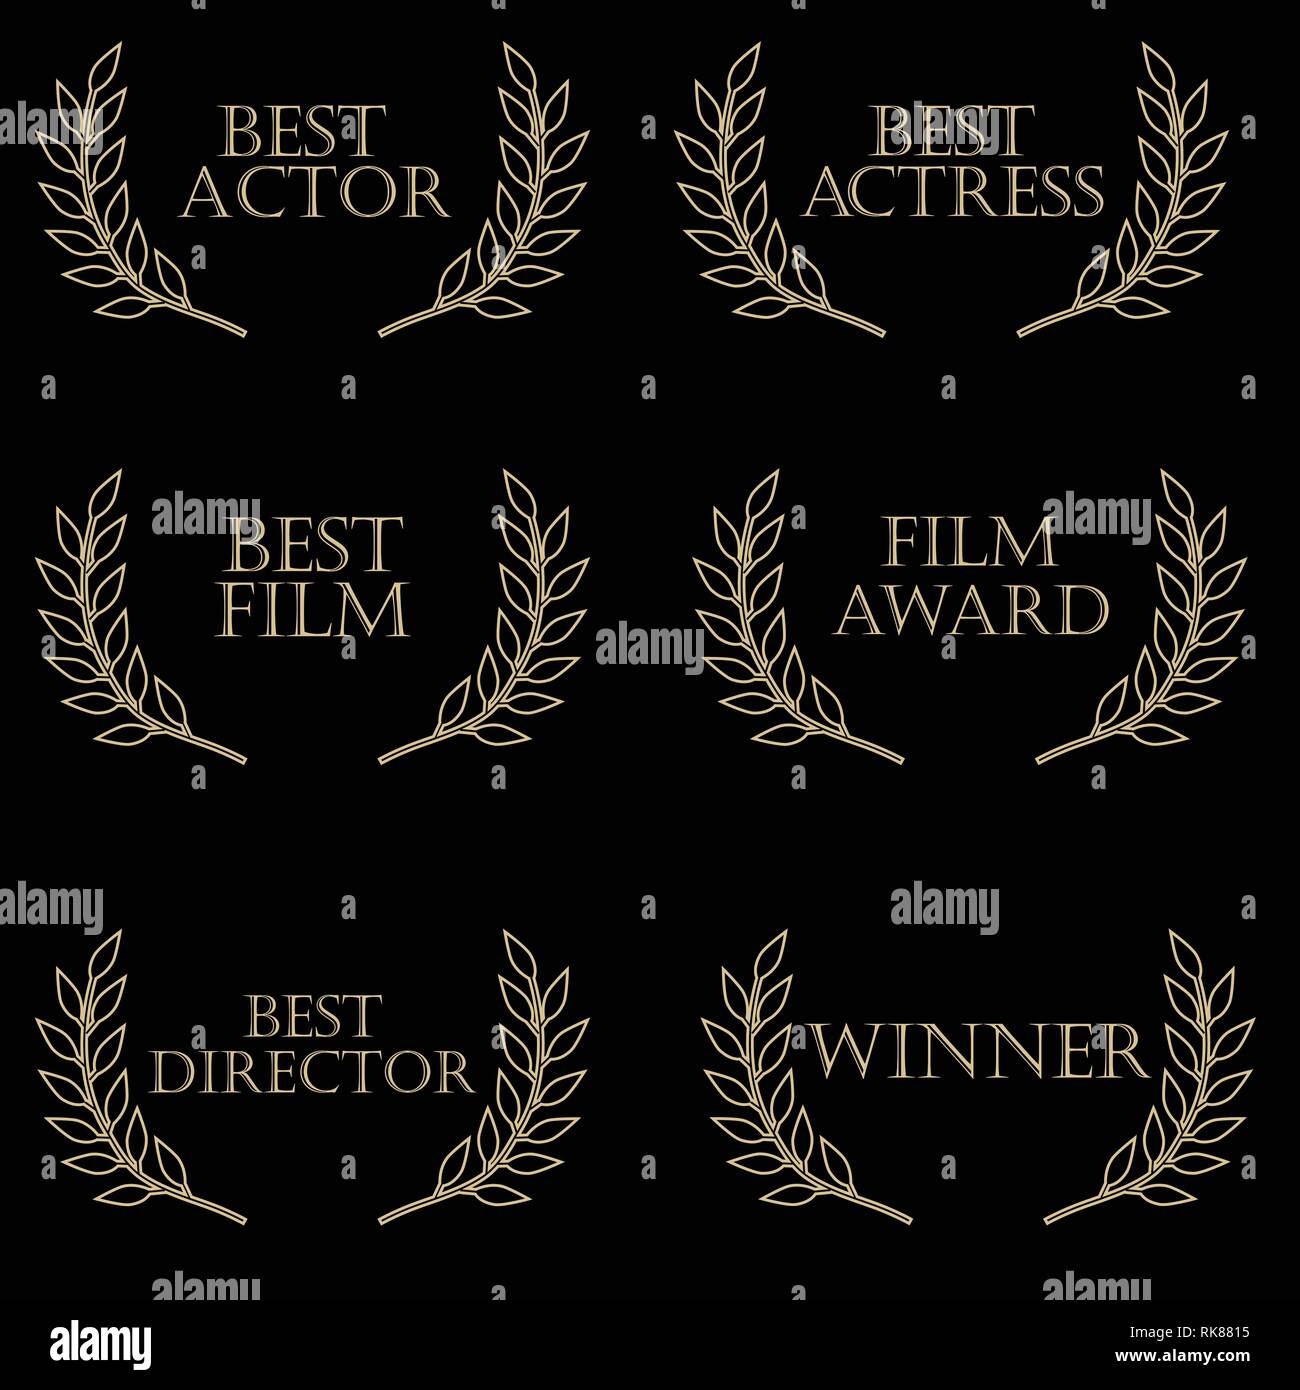 Film awards: best actor, best actress, film awards, best director, best film, winner. Film festival, movie awards, olive brunch Stock Vector